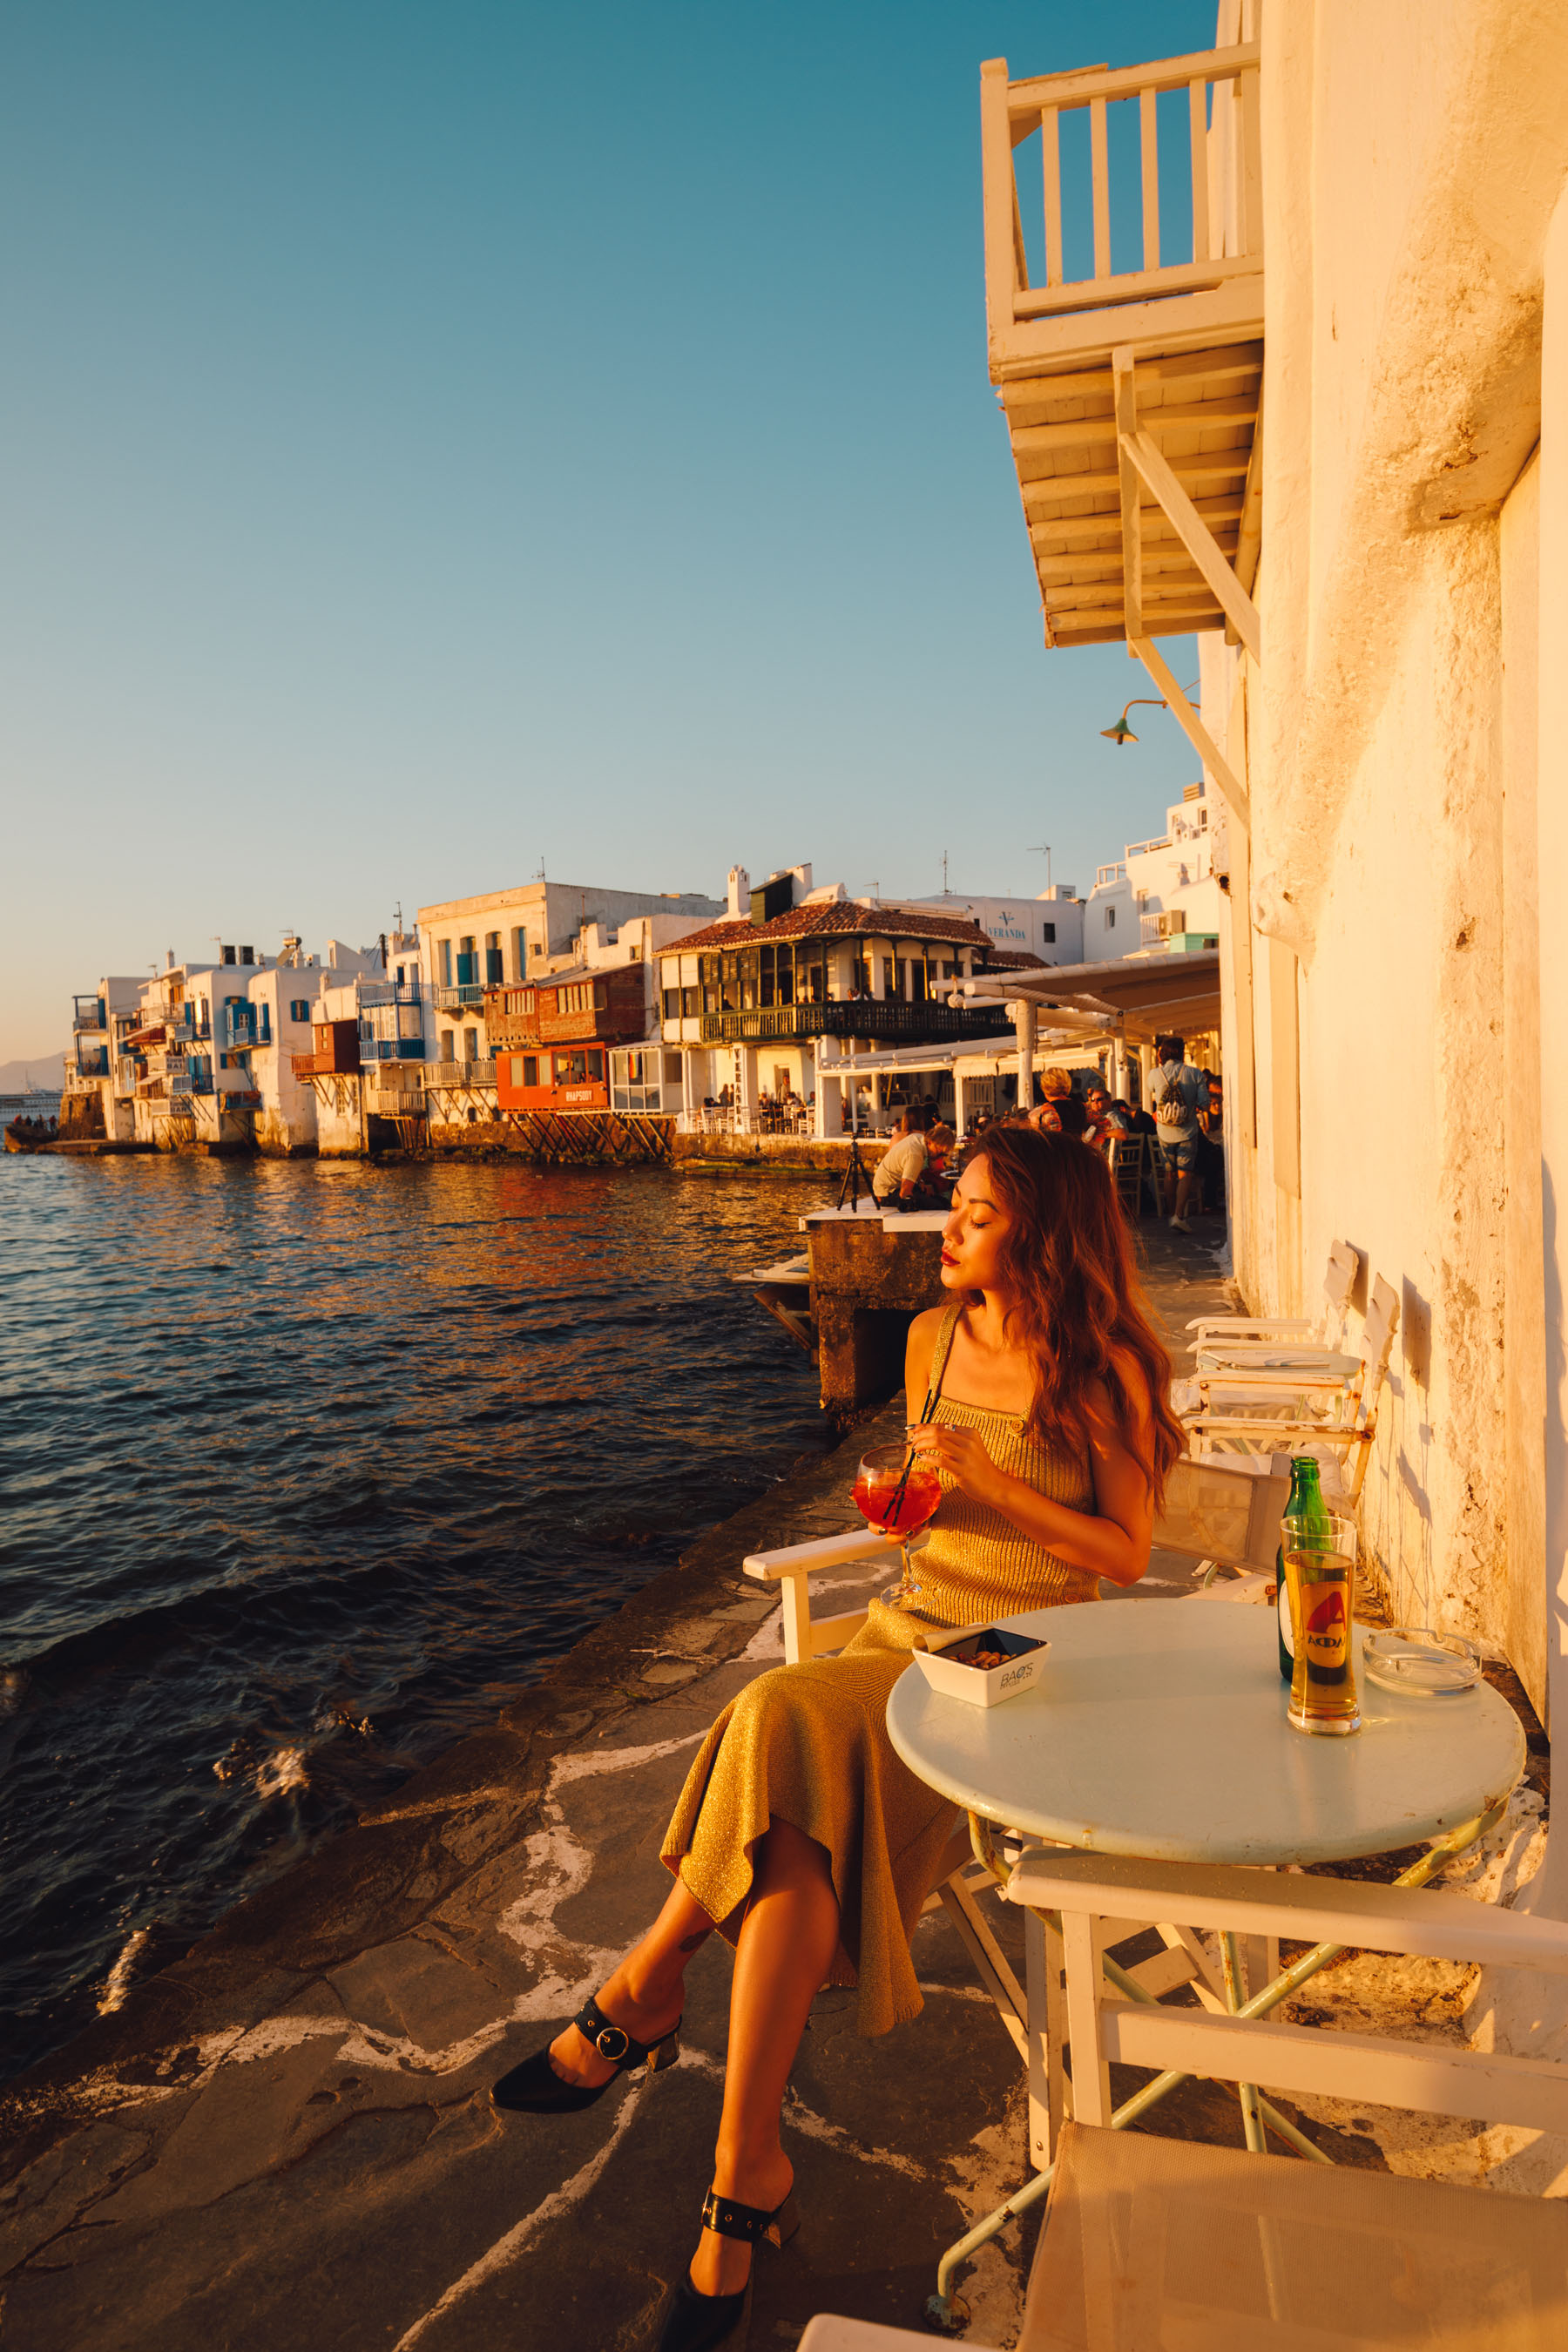 The Ultimate Greece Travel Guide - Santorini & Mykonos // Notjessfashion.com // travel blogger, greece travel tips, mykonos travel tips, santorini travel tips, fashion travel blogger, santorini photos, mykonos photos, santorini travel spots, mykonos travel spots